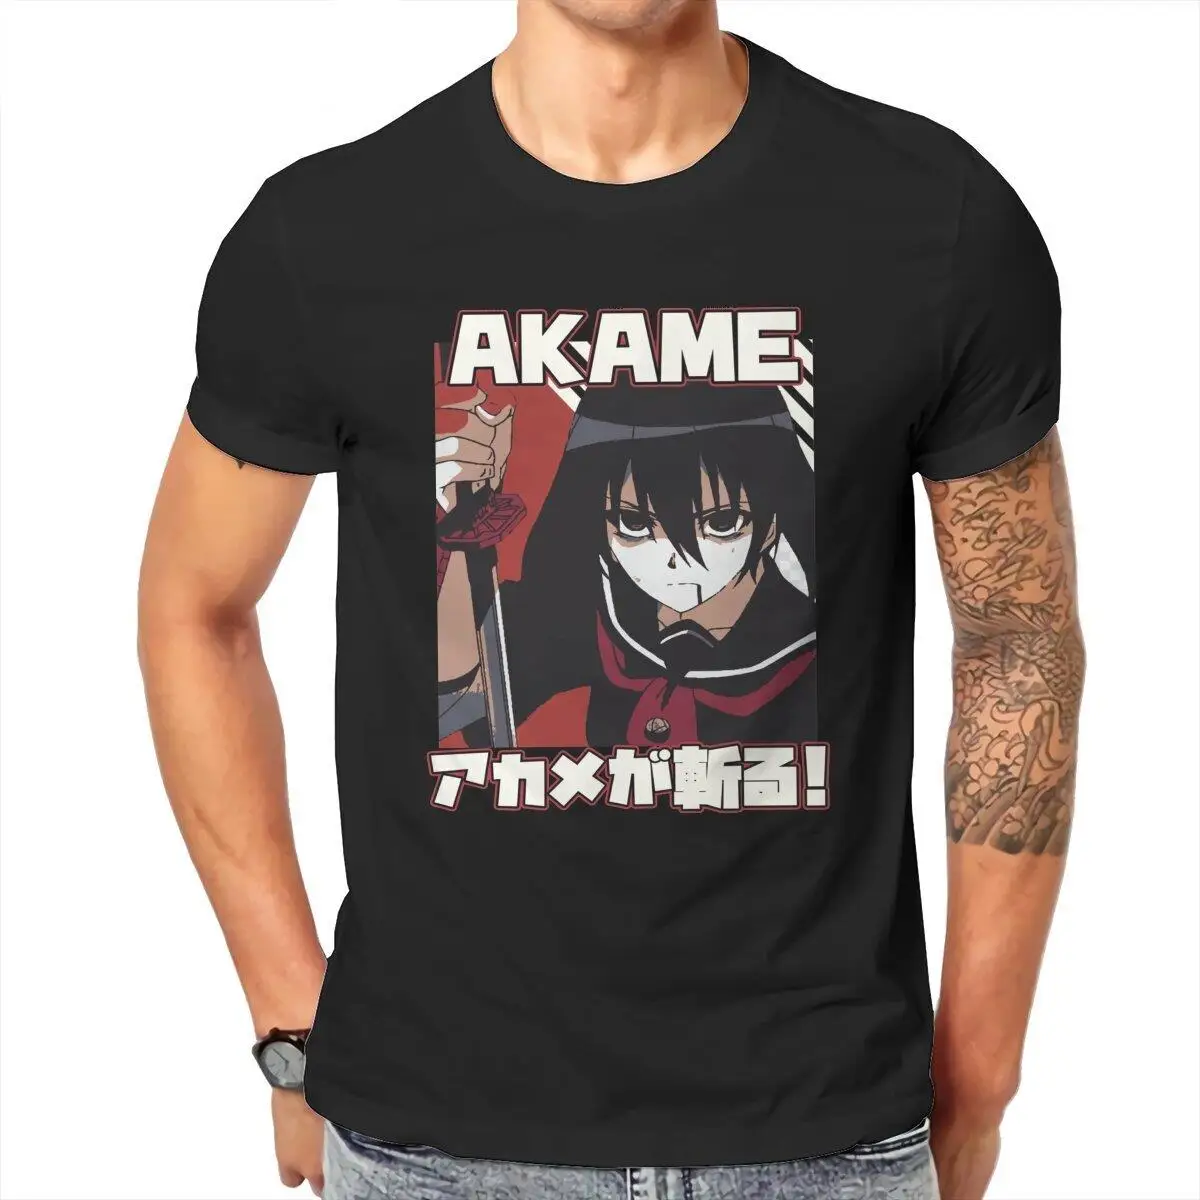 Unique Akame Ga Kill Anime Manga  T-Shirt for Men Crew Neck 100% Cotton T Shirts  Short Sleeve Tees New Arrival Tops